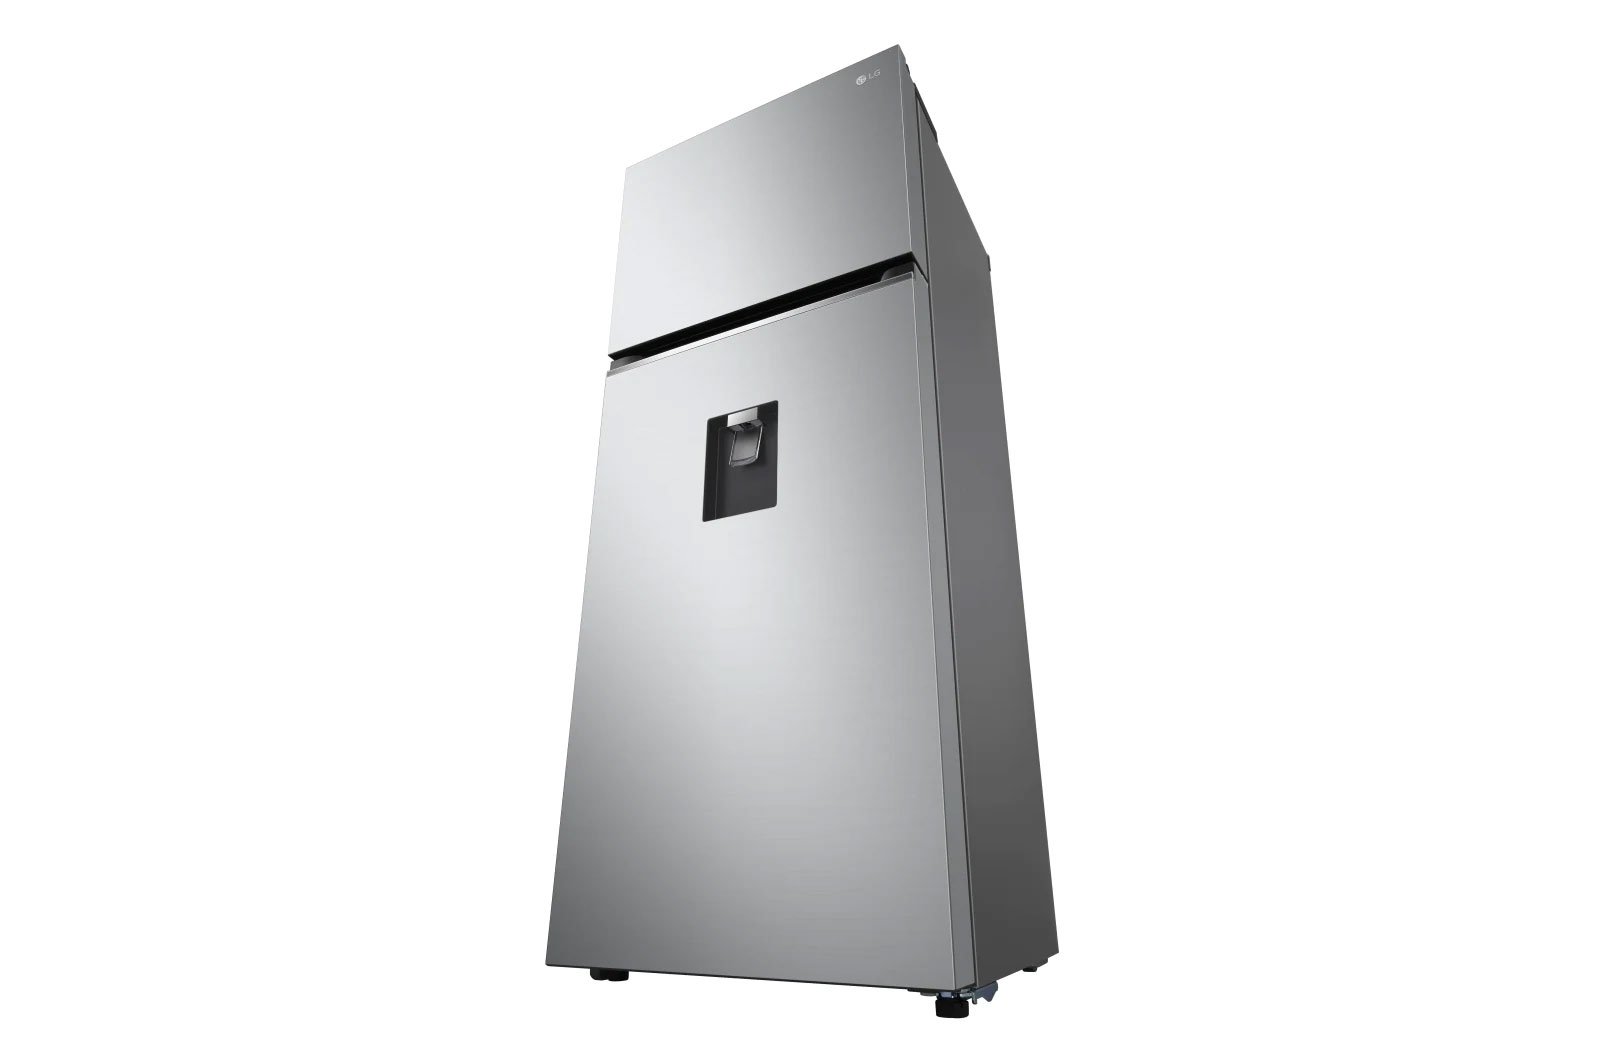 Tủ lạnh LG Inverter 374L GN-D372PSA